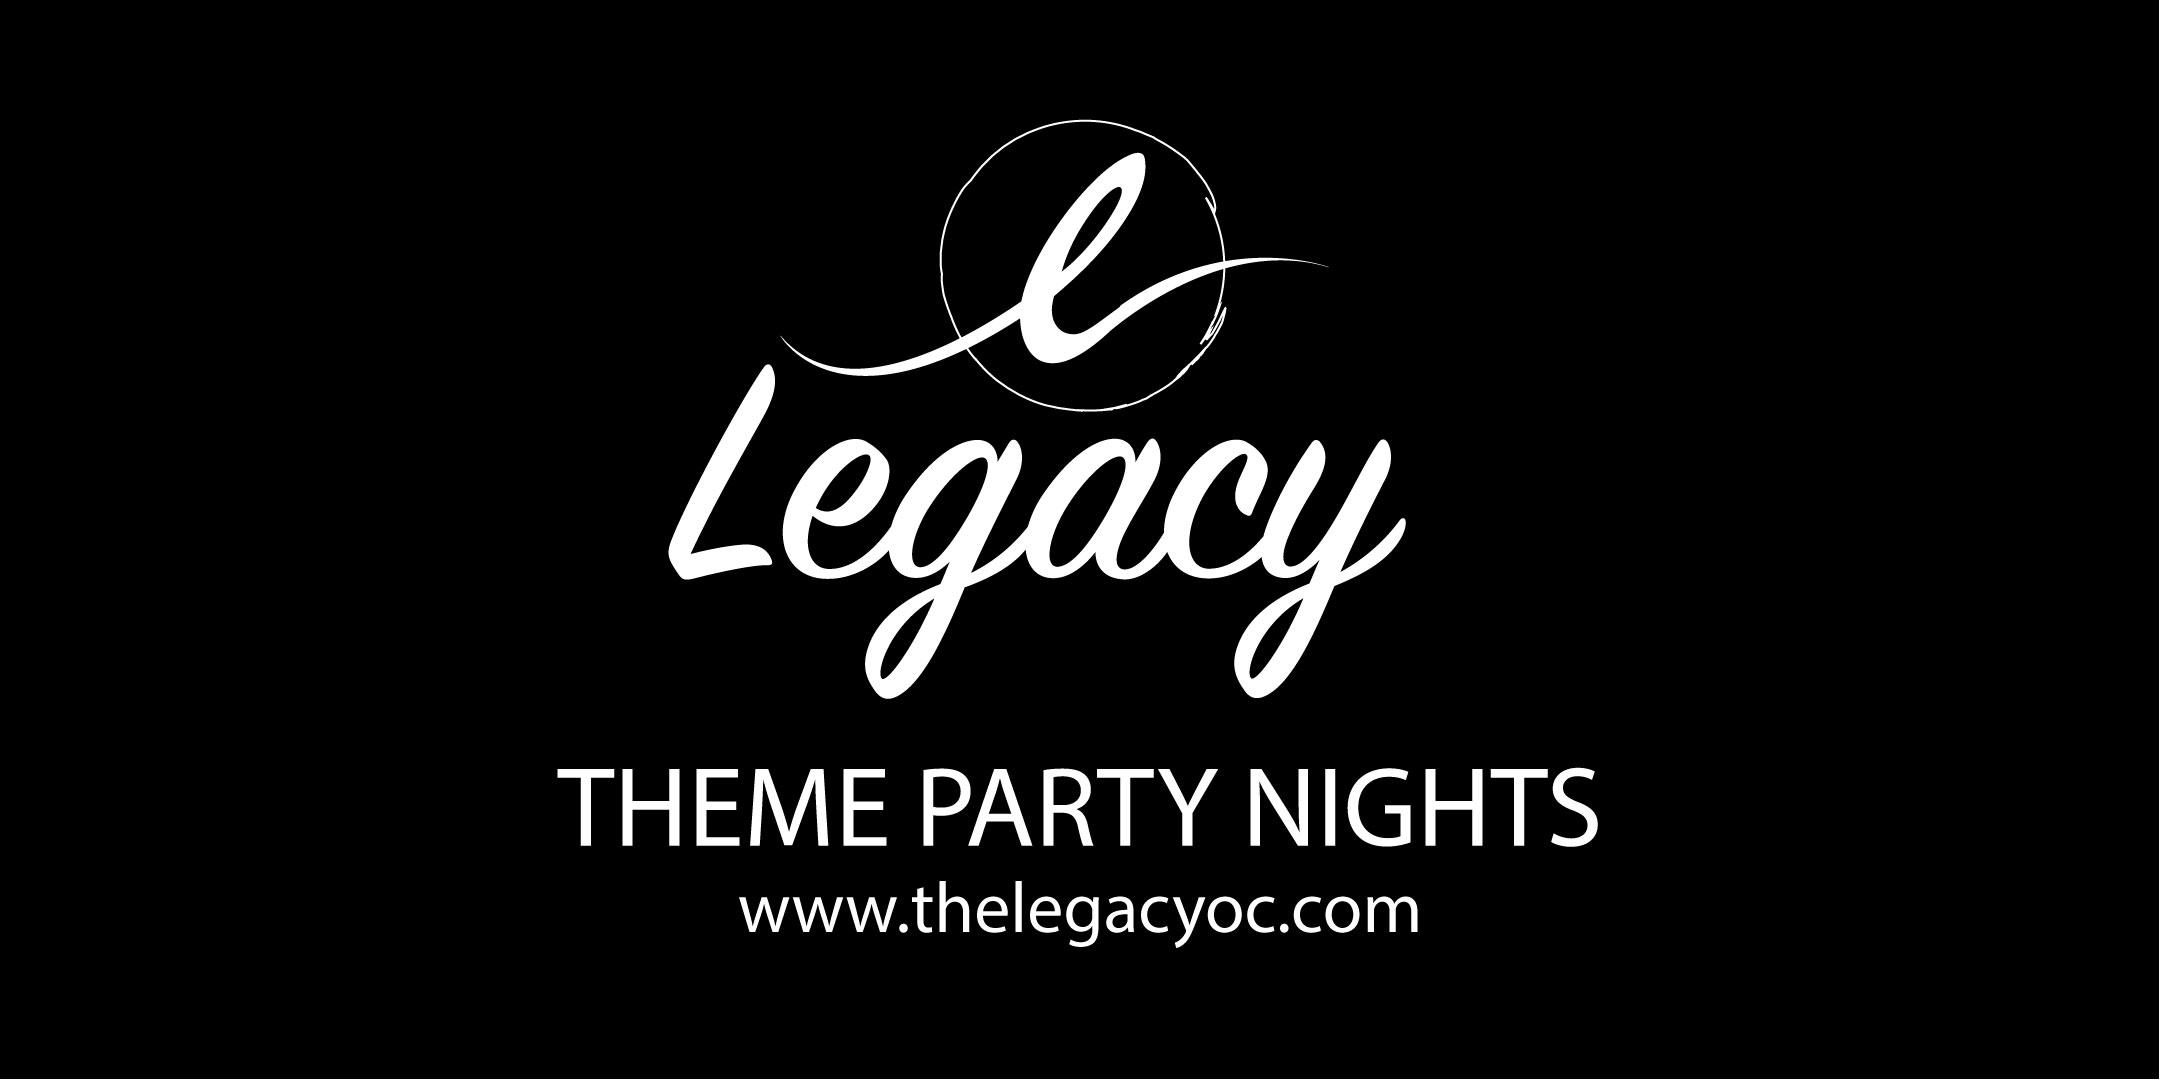 PAJAMA PARTY | Legacy Nightclub Themed Party Series| SATURDAY APRIL 4TH